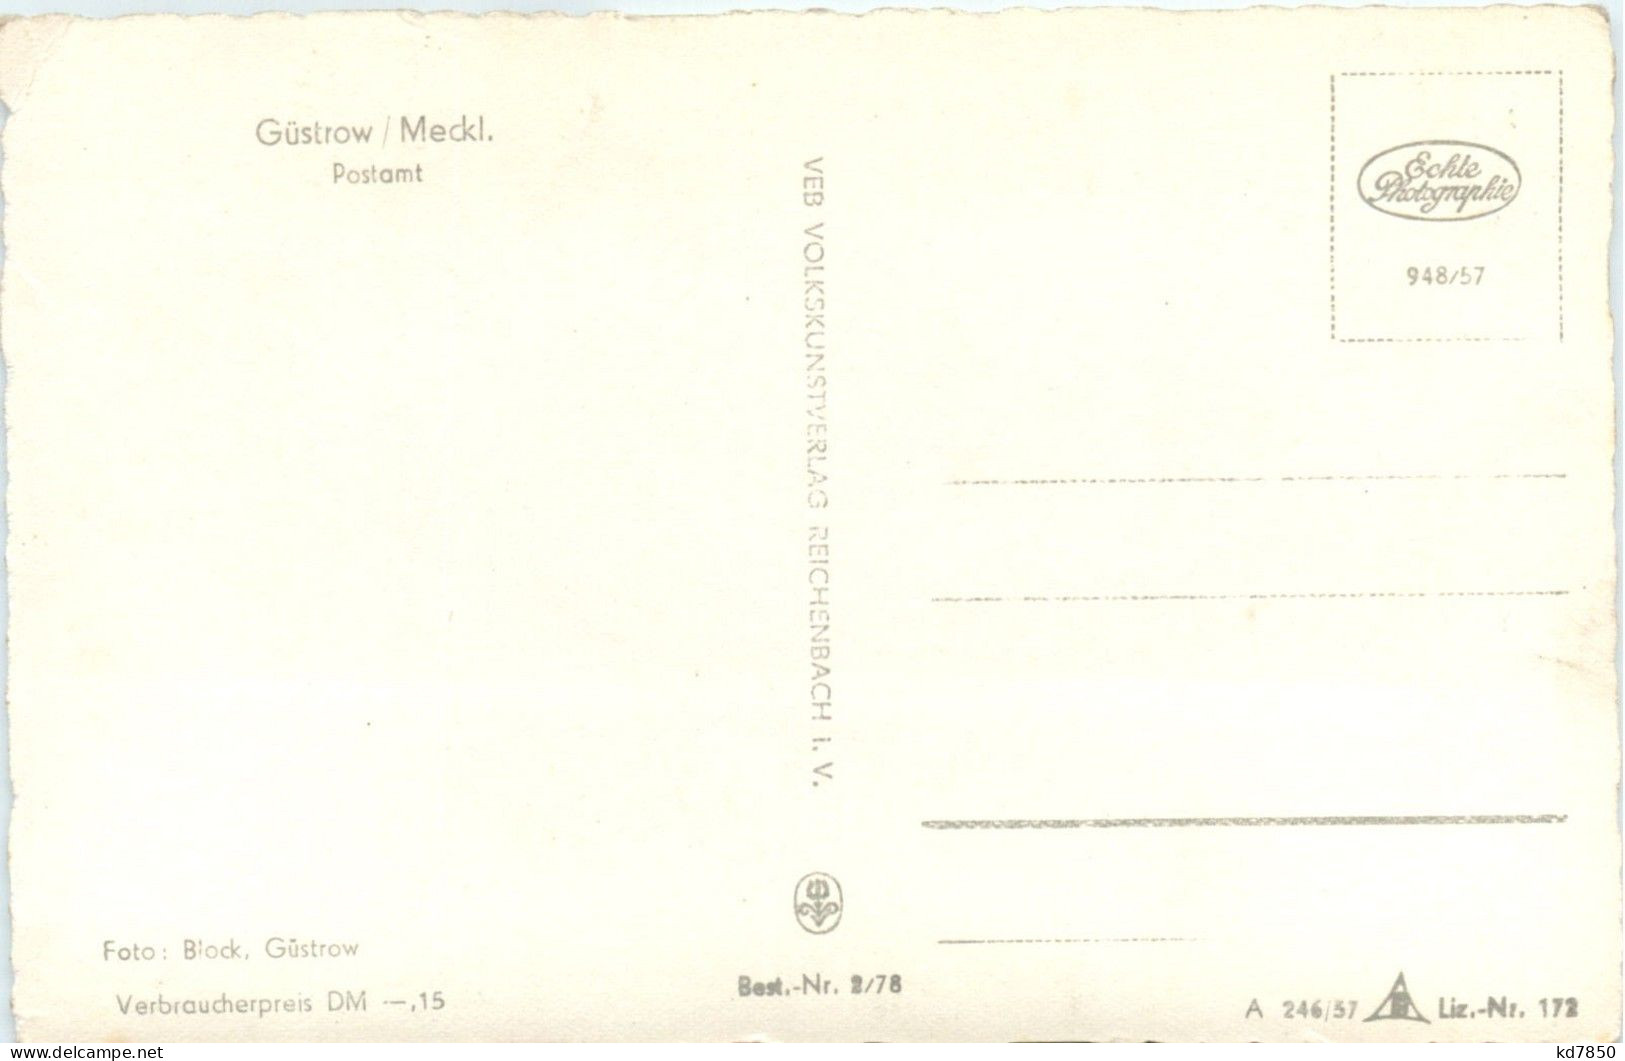 Güstrow/Meckl. Postamt - Guestrow